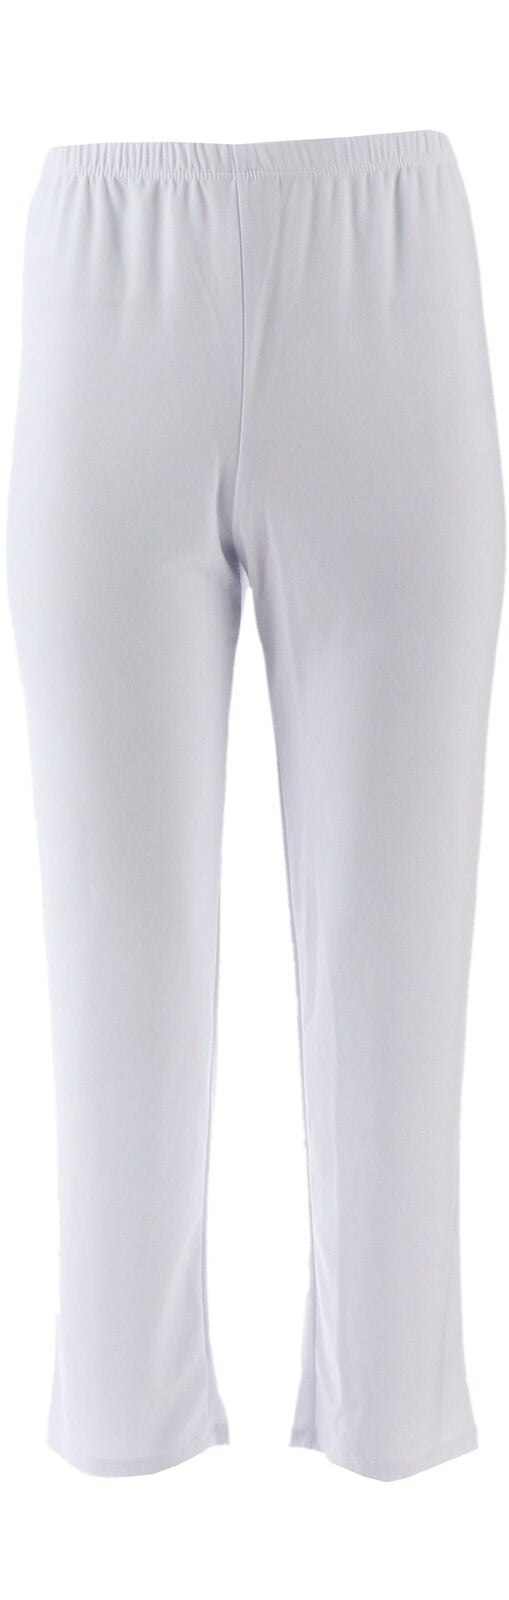 Slinky Brand 2Pk Basics Solid Crop Pants Women's 601-939 - Walmart.com